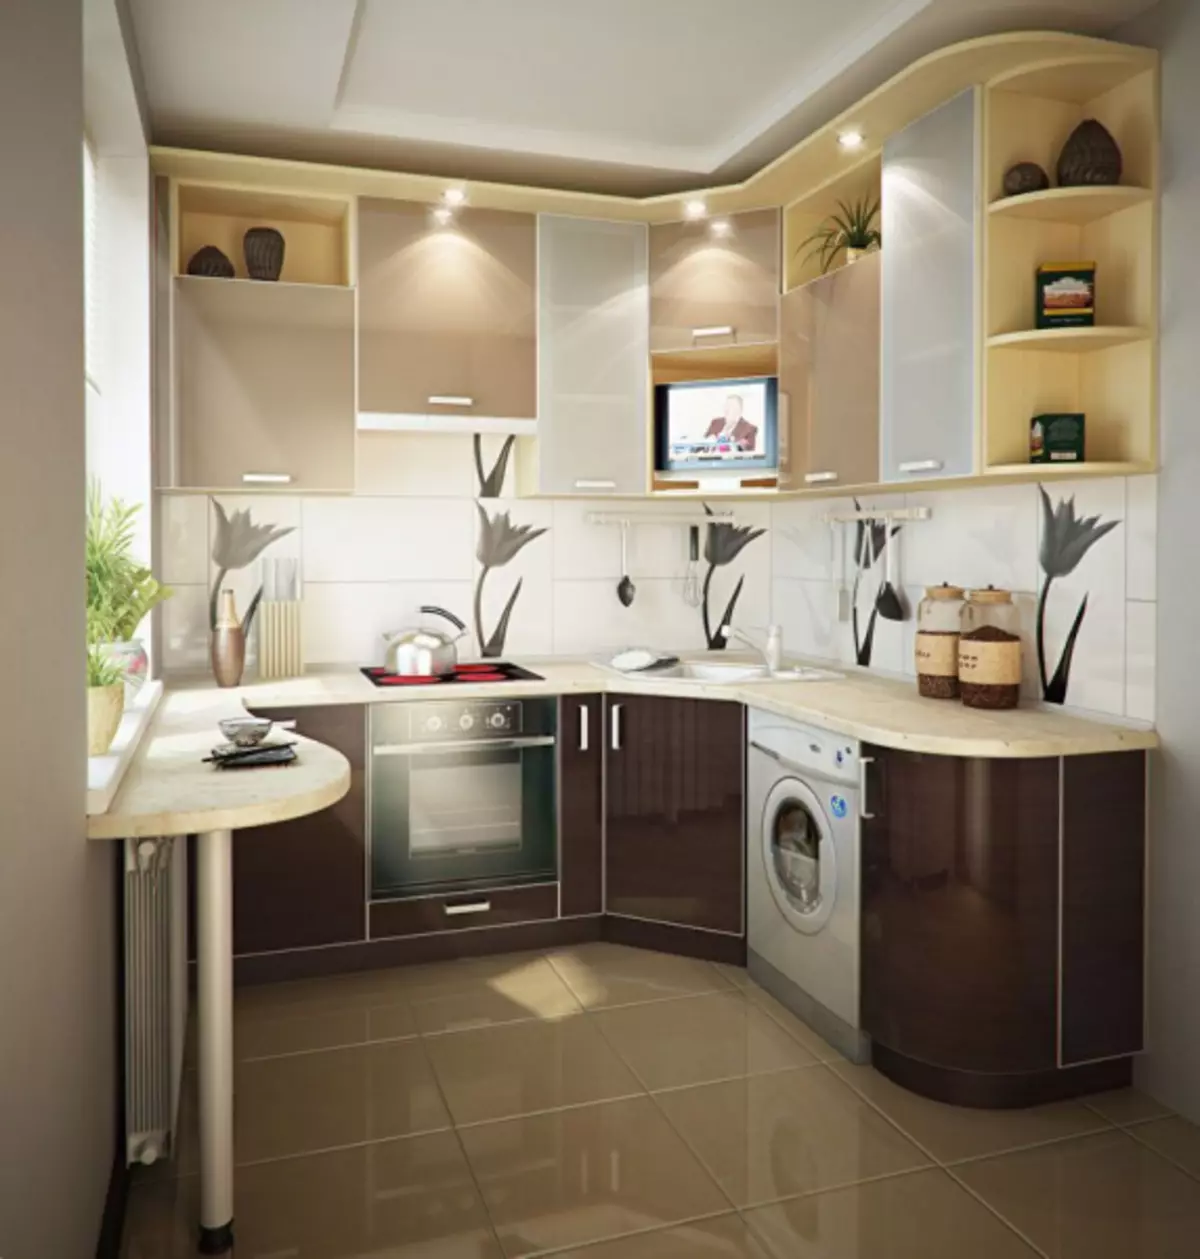 9 sq m kitchen interior - Successful design secrets - 45 photos